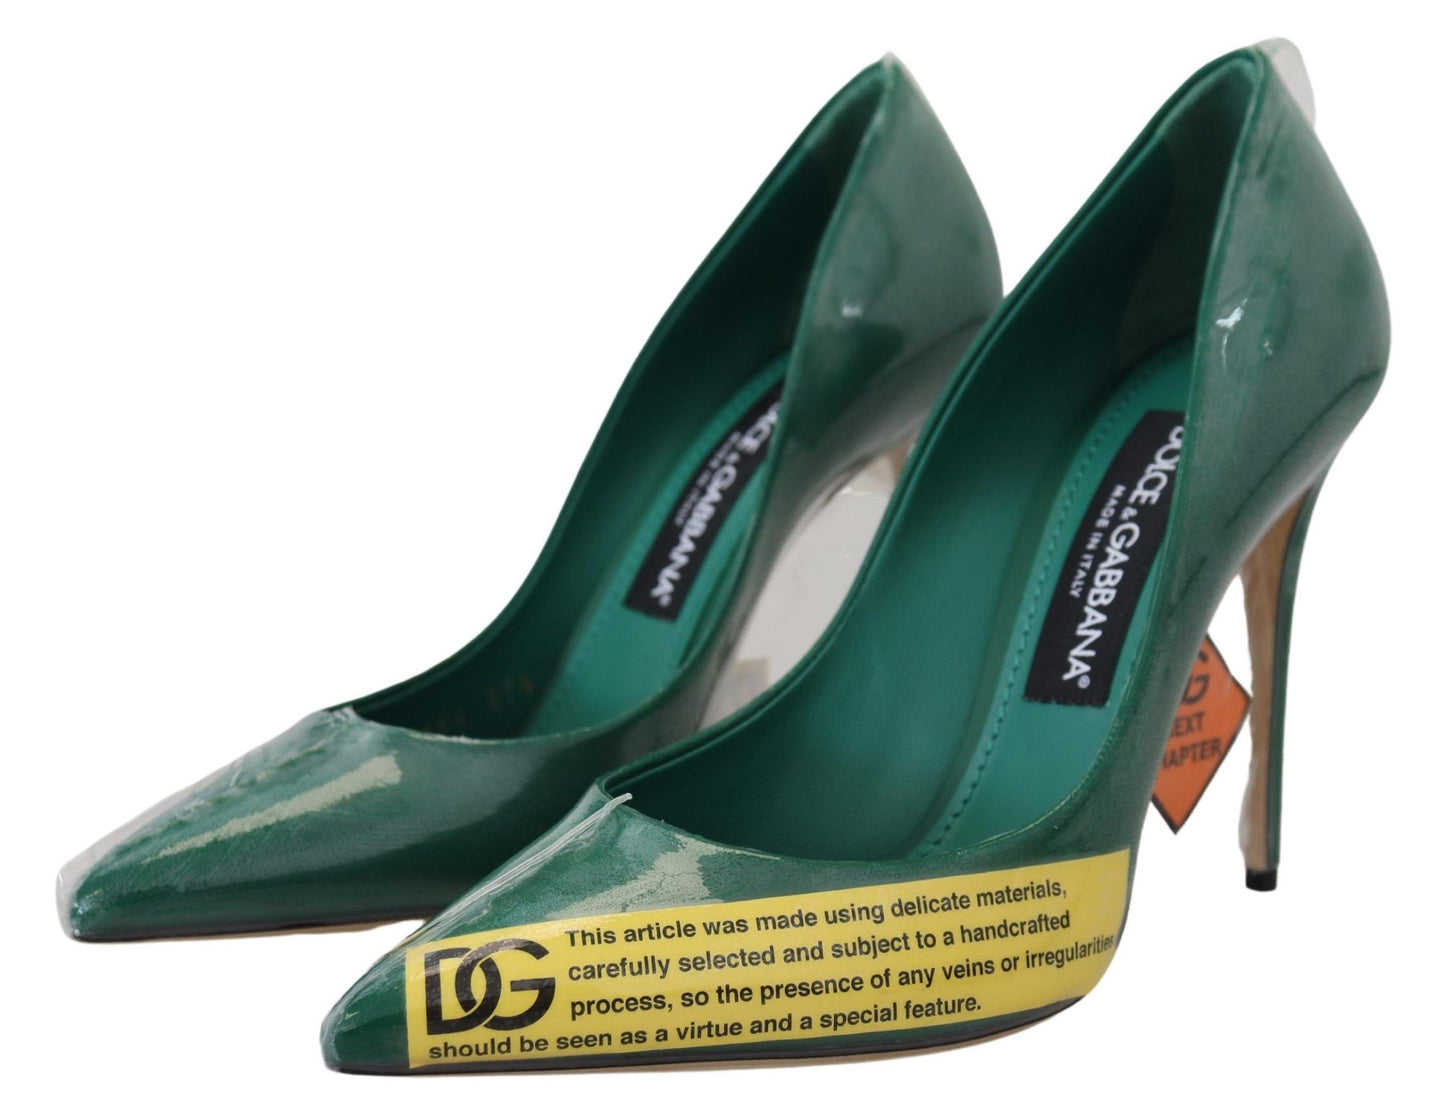 Tacchi in pelle verde Dolce & Gabbana pompa scarpe in plastica